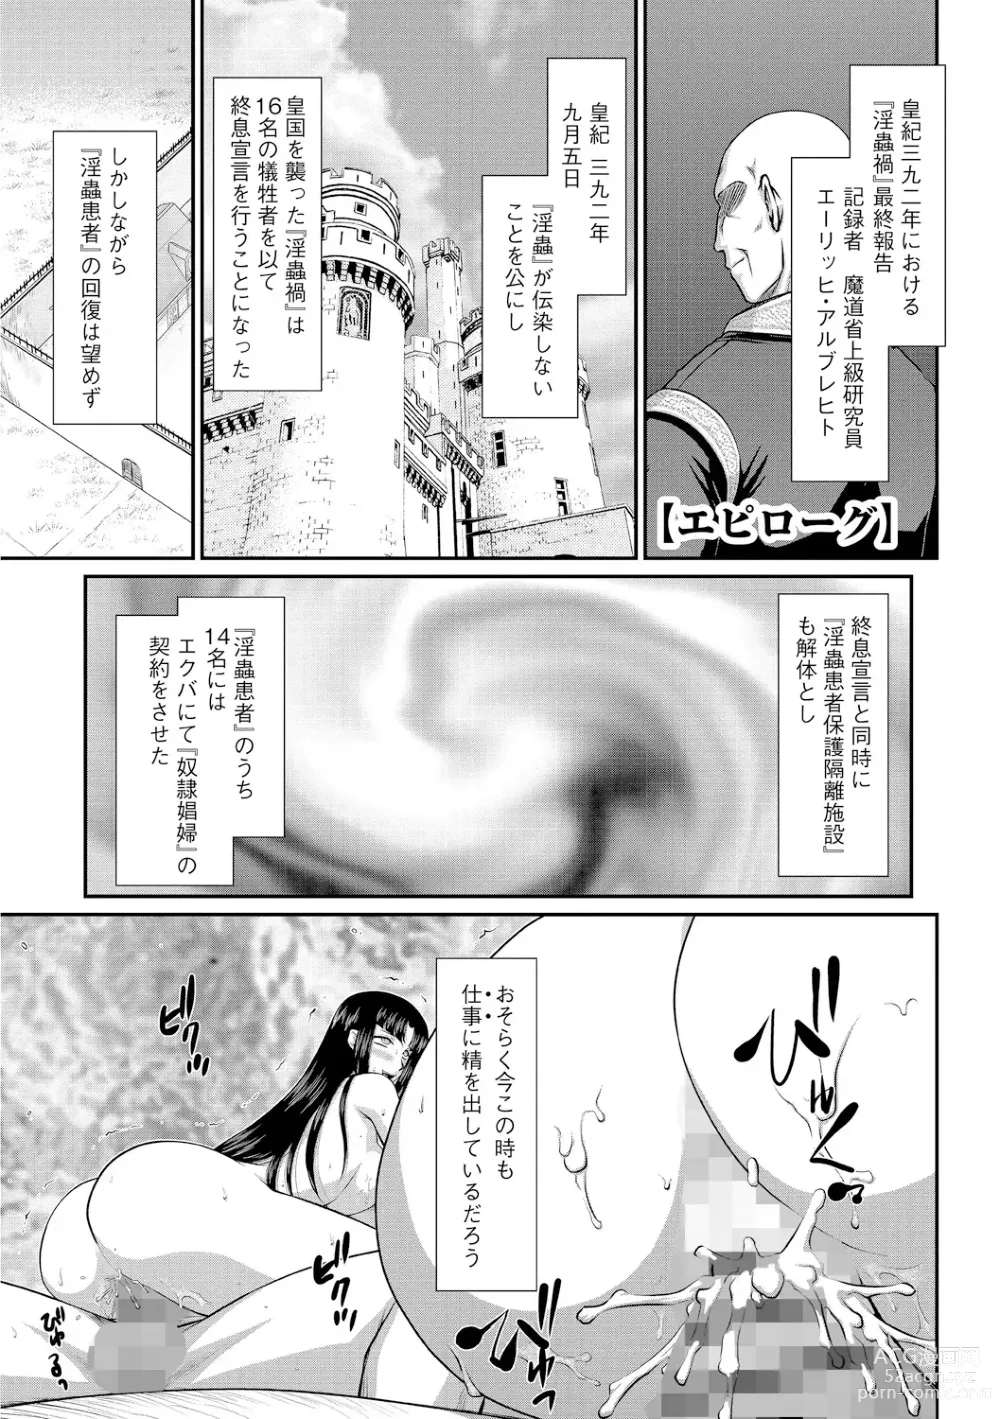 Page 191 of manga Ingoku no Kouki Dietlinde